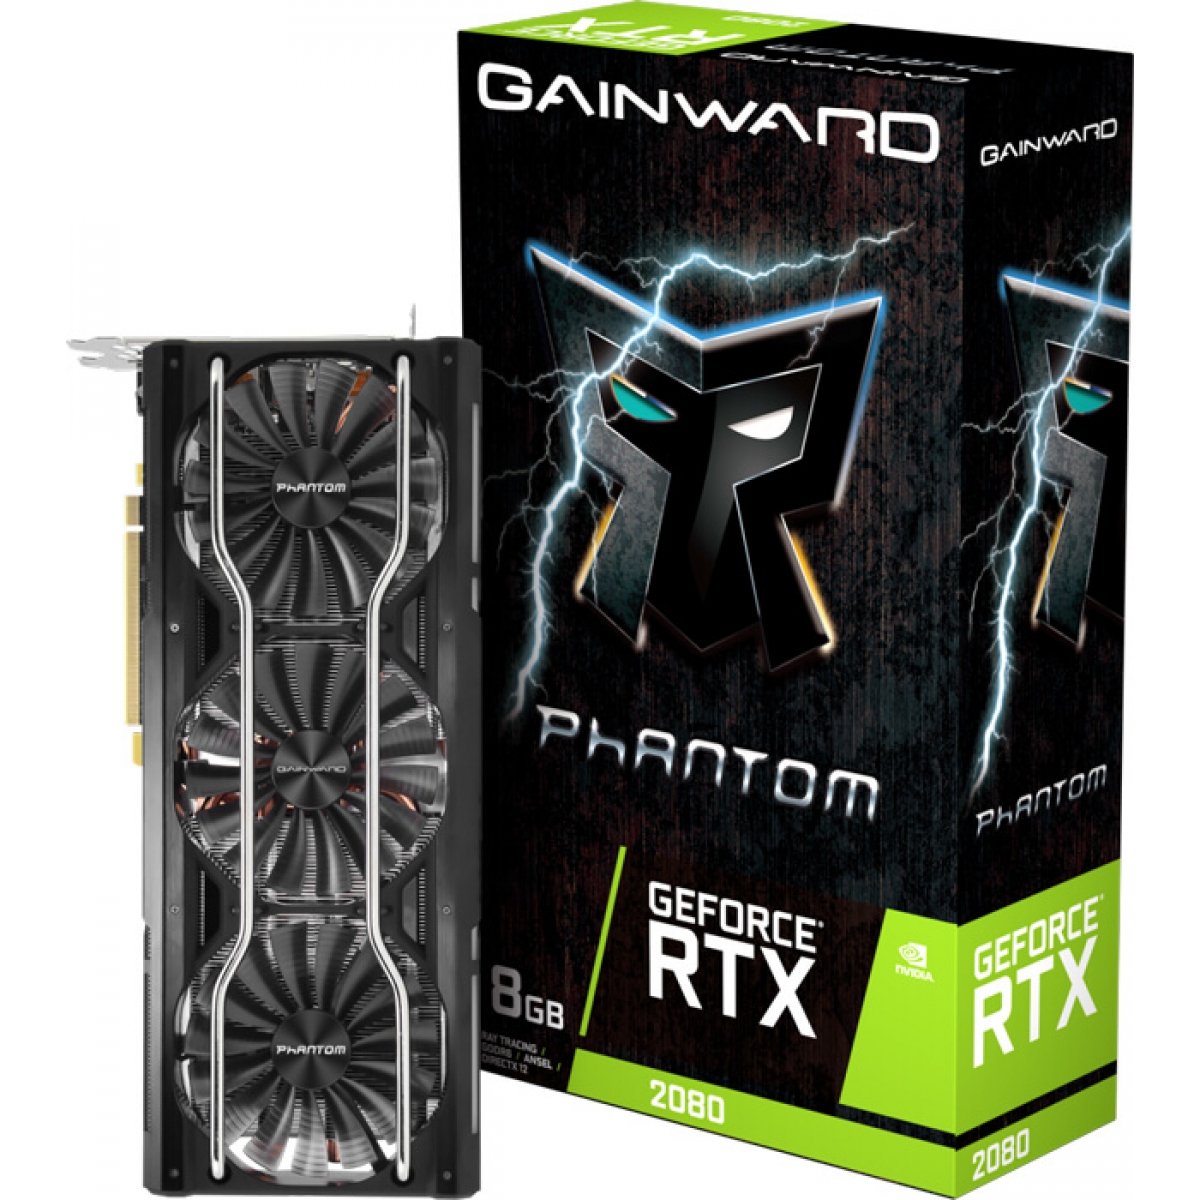 Placa De Vídeo Gainward Geforce RTX 2080 Phantom, 8GB GDDR6, 256Bit